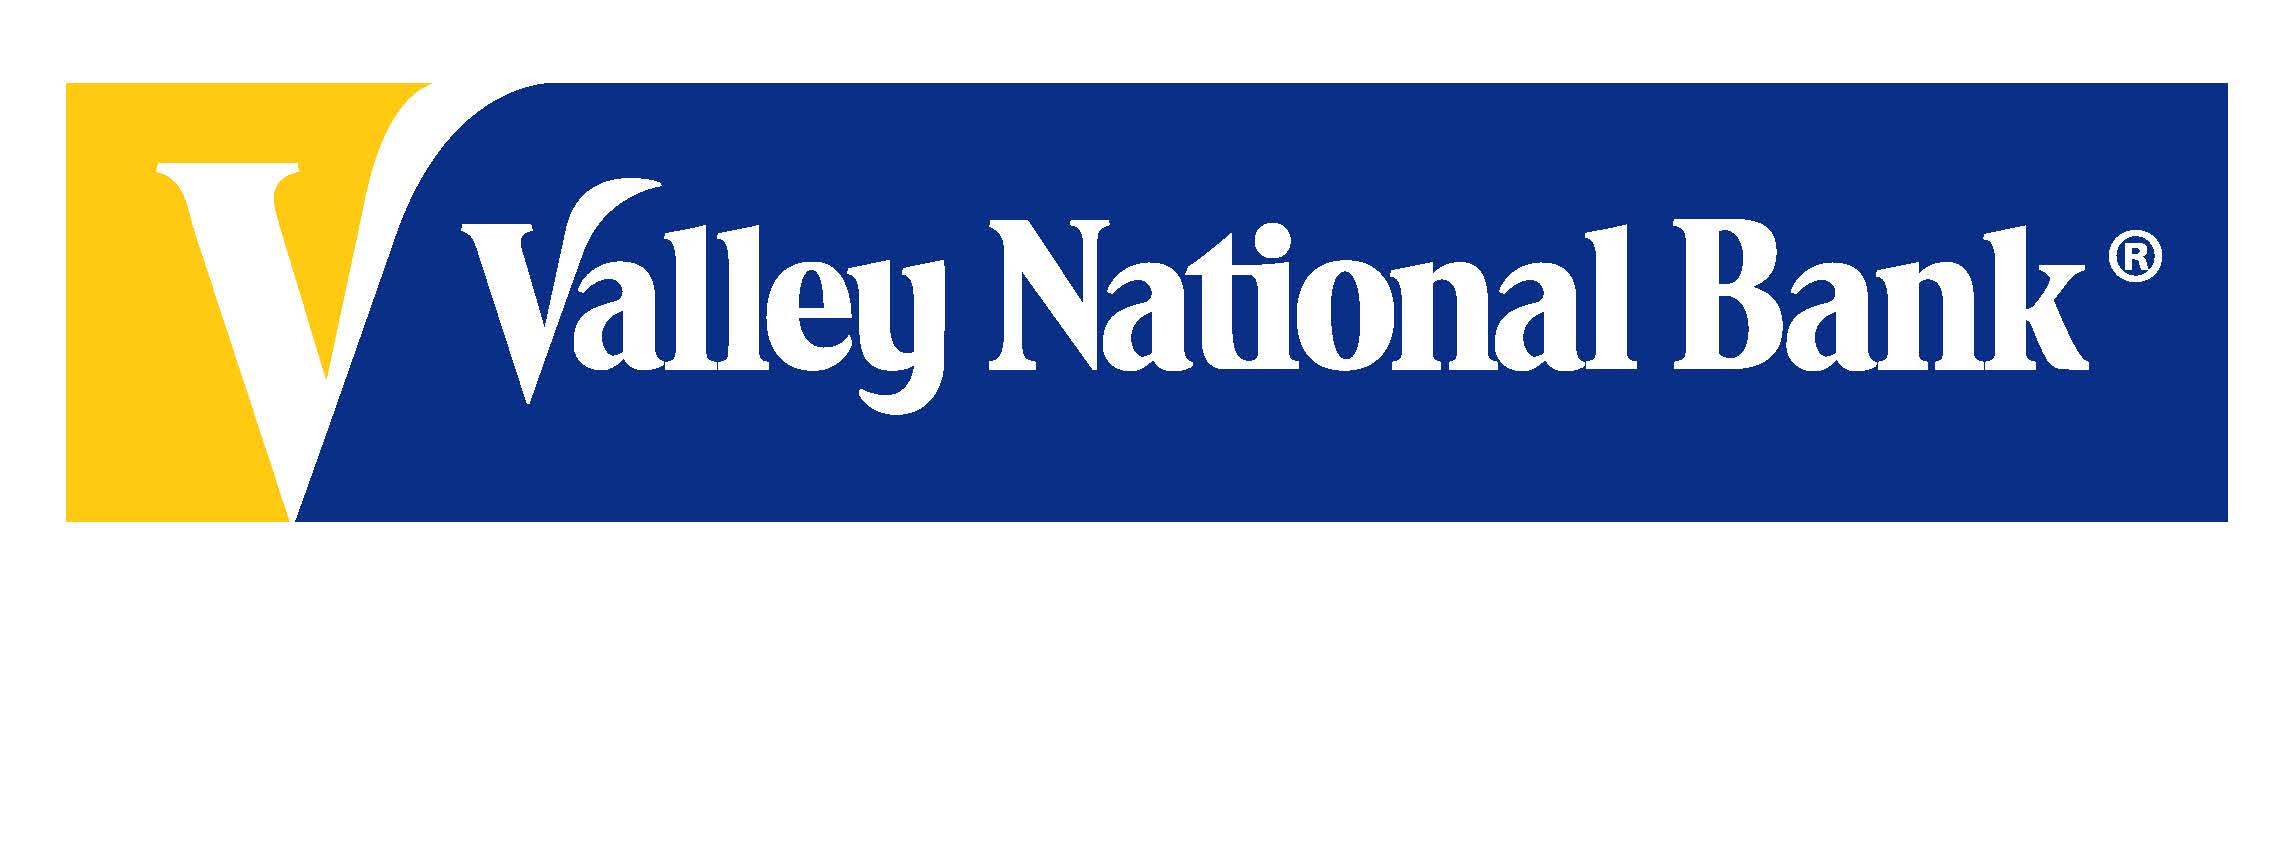 Valley National Bank Brand Logo